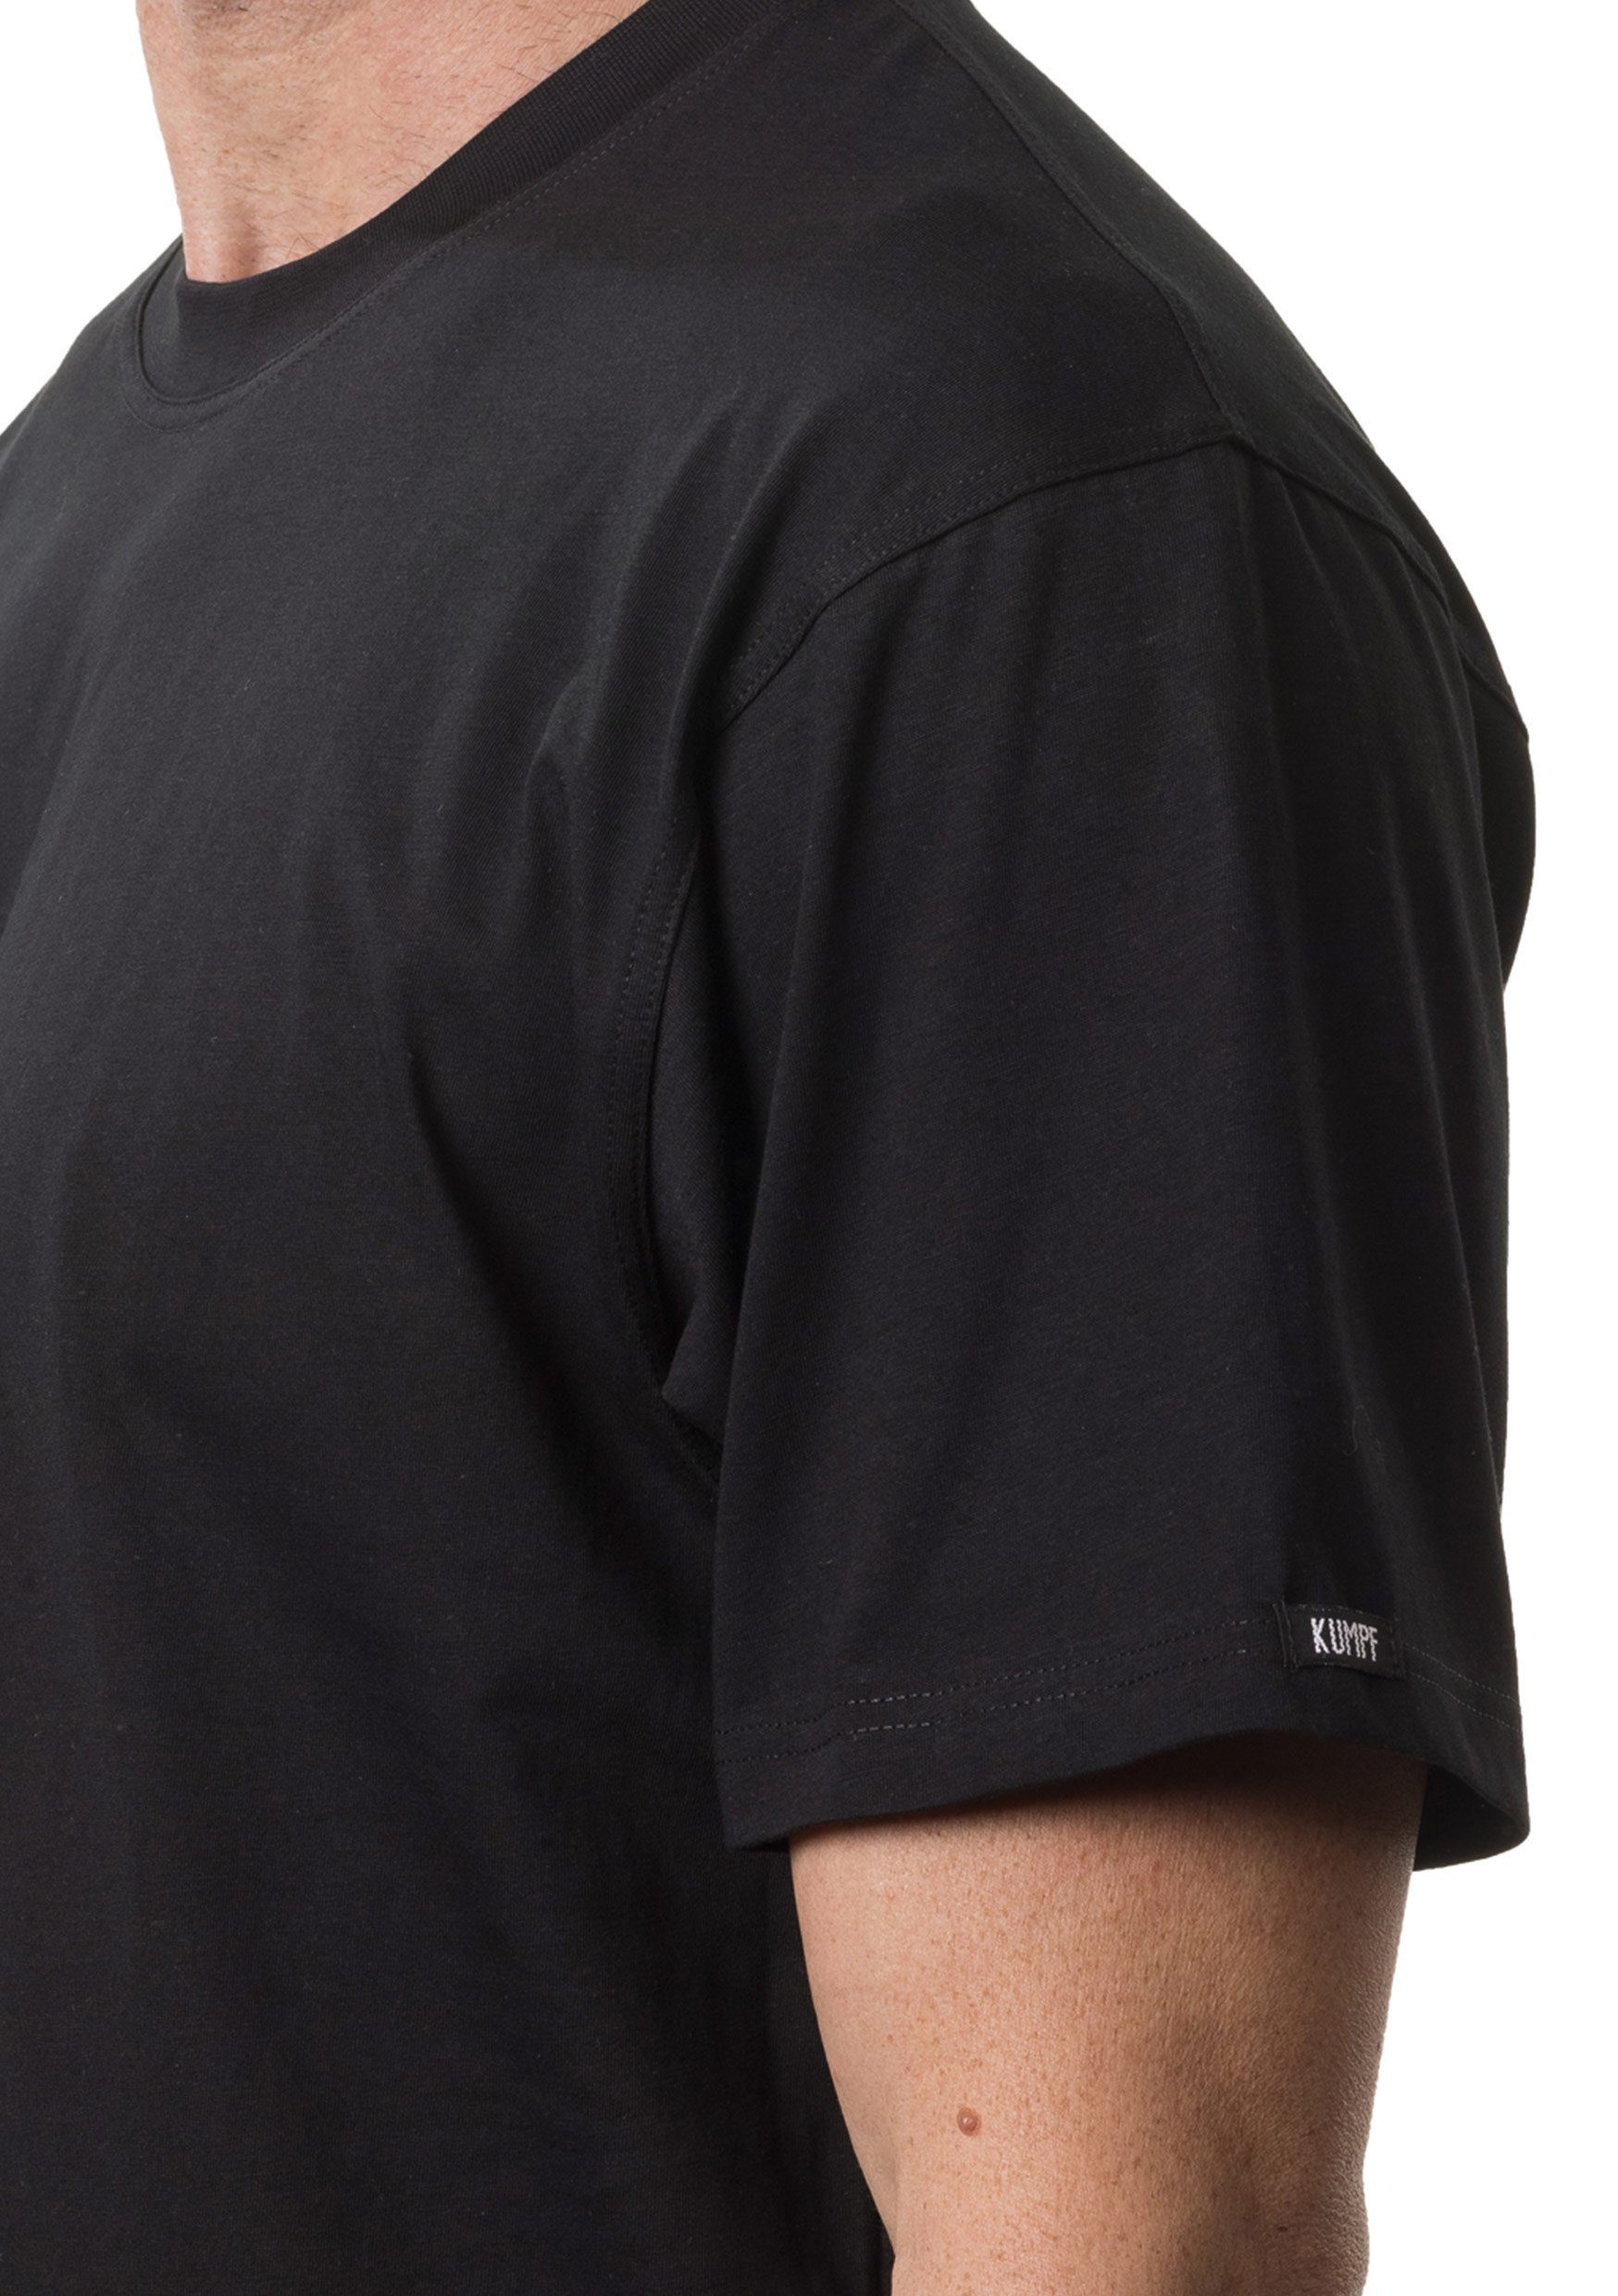 schwarz 2-St) T-Shirt Sparpack Cotton KUMPF Bio Unterziehshirt (Spar-Set, 2er Herren Markenqualität hohe